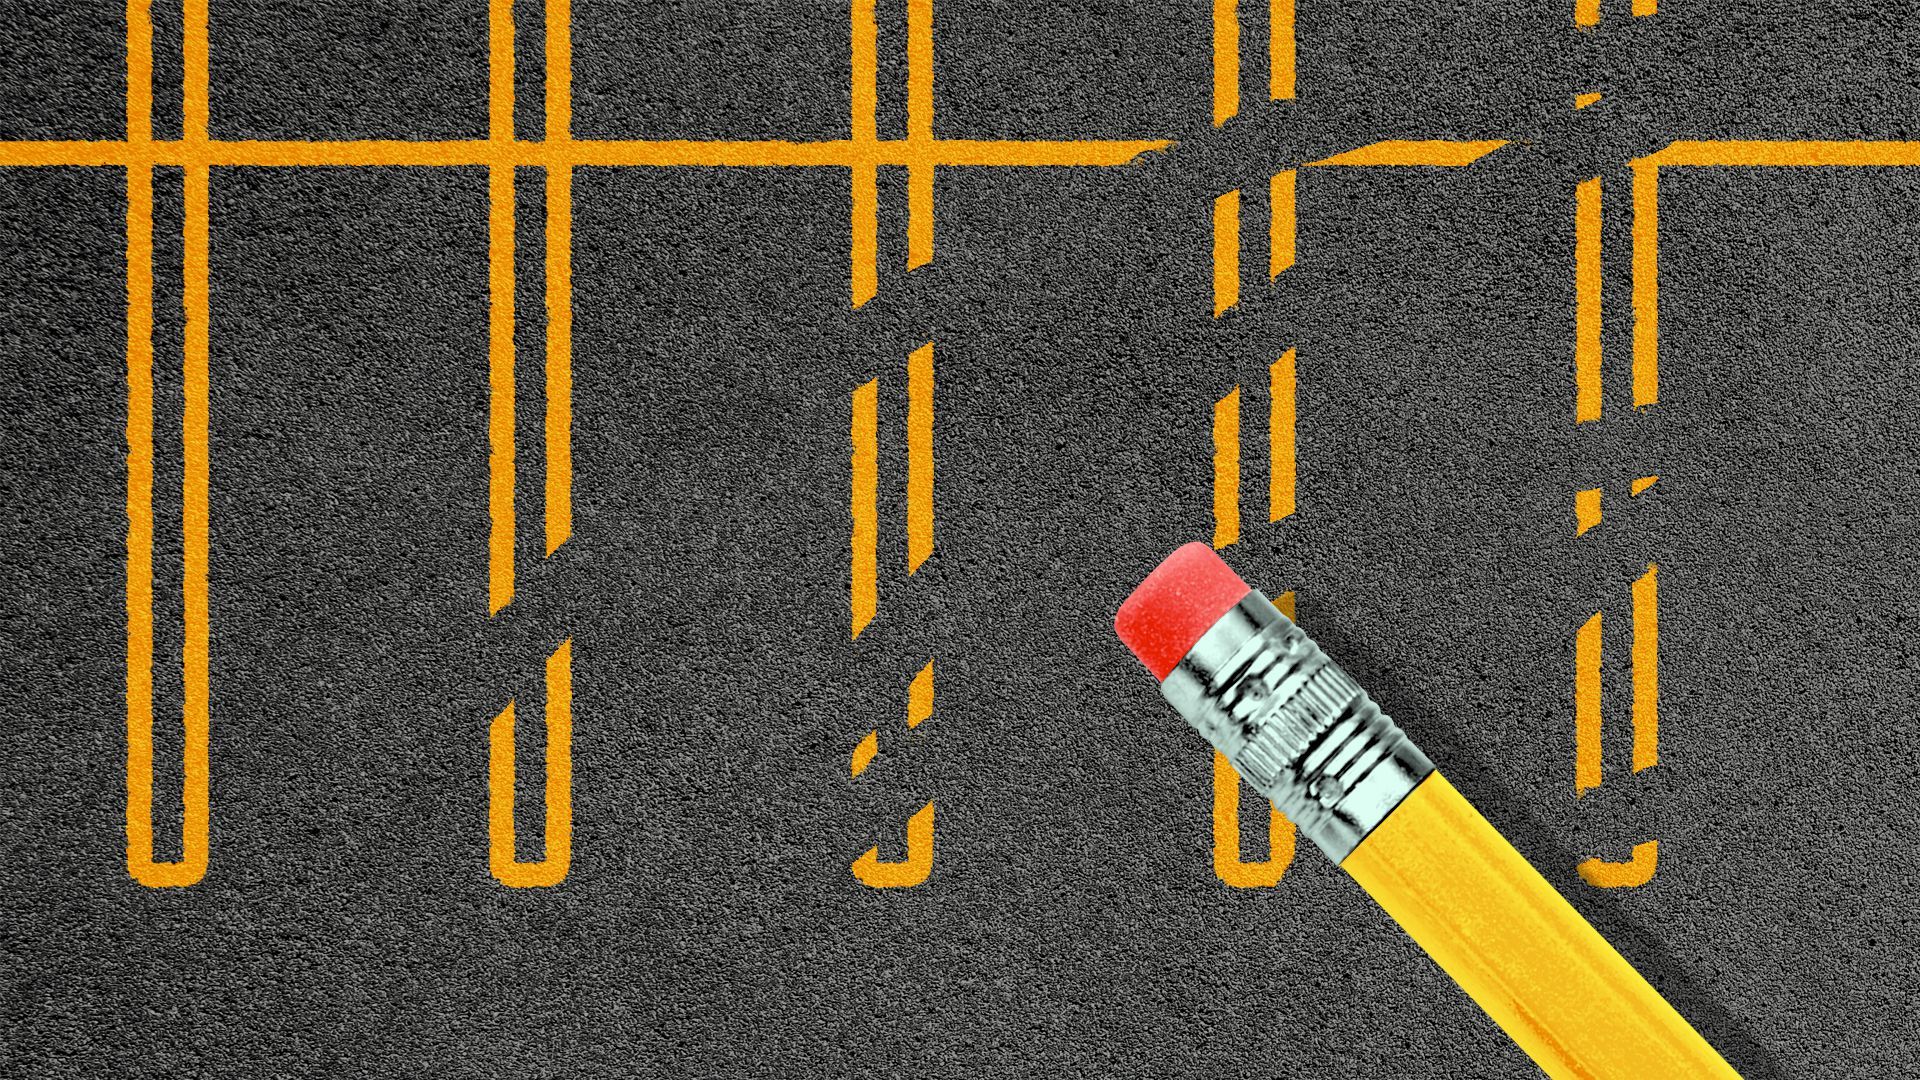 Illustration of a pencil eraser erasing the lines in a parking lot.